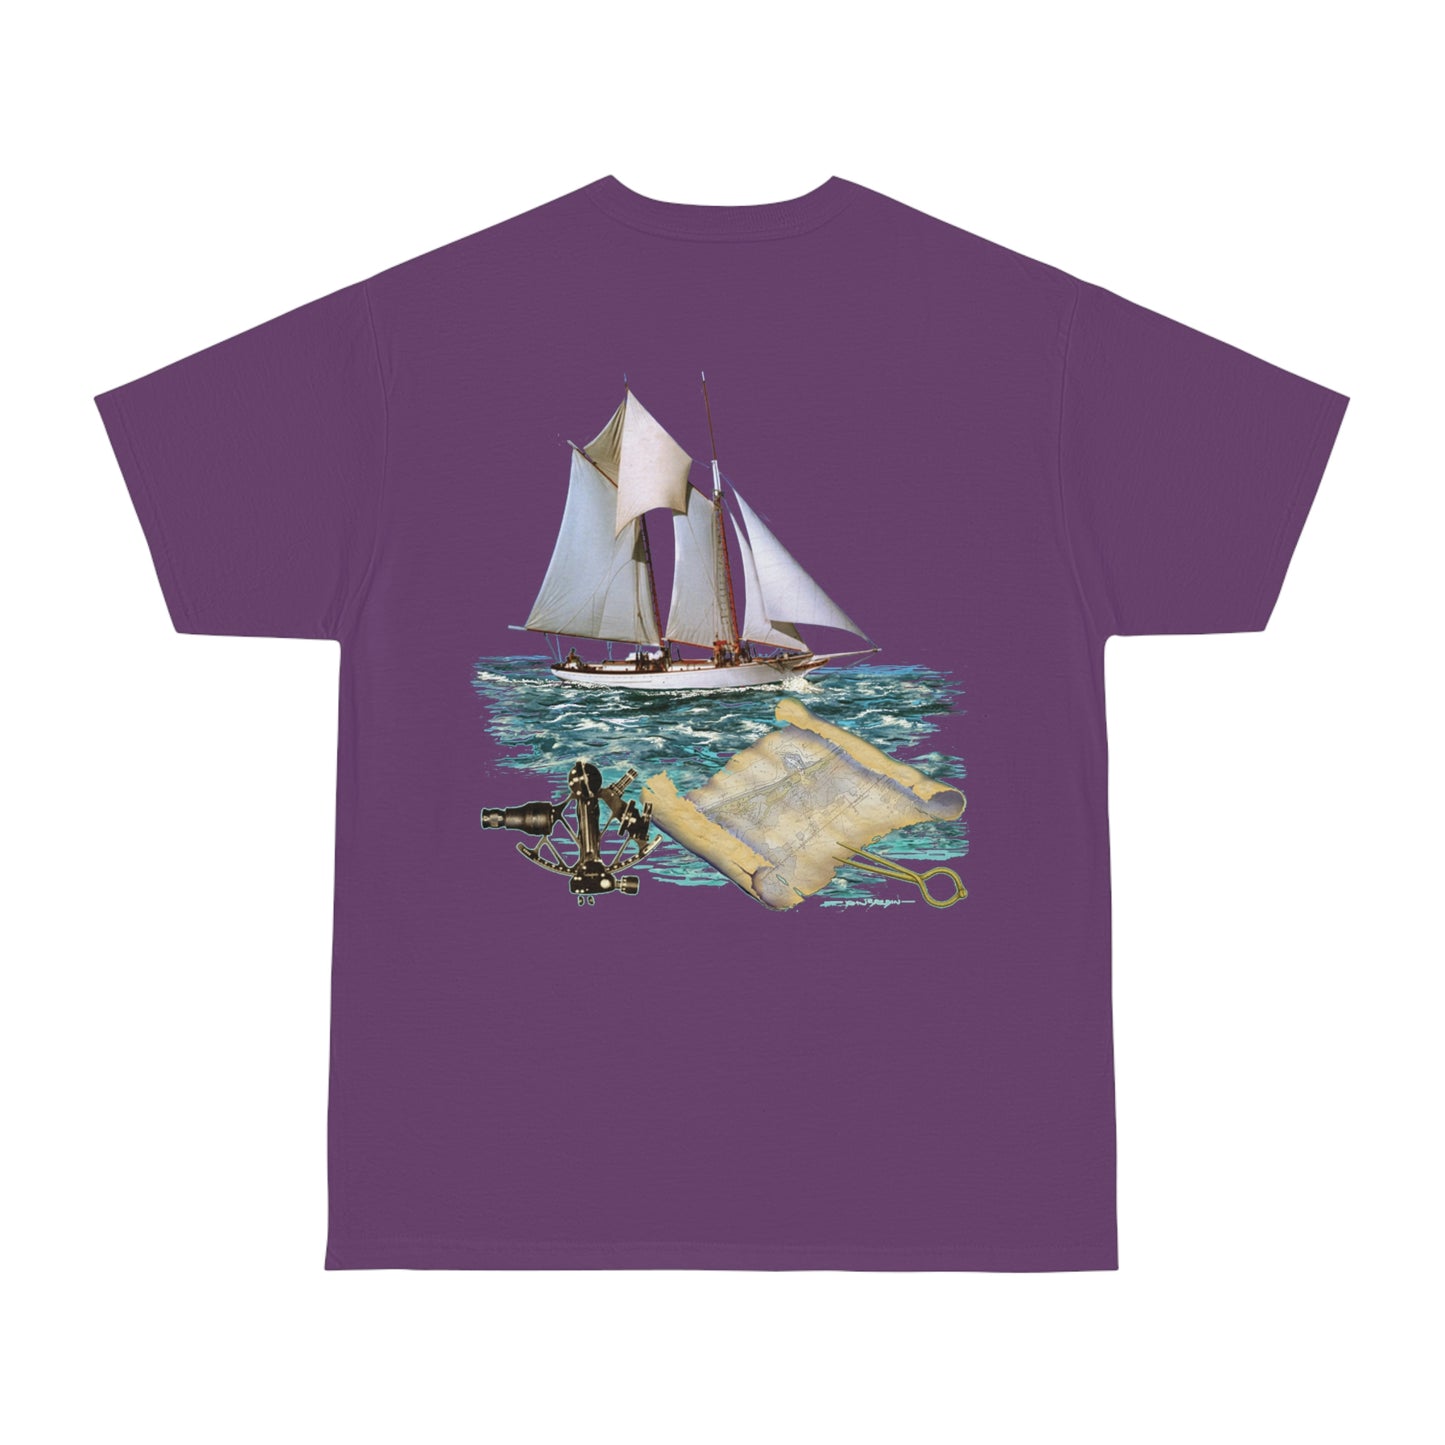 Windswept T-Shirt, William H Aubrey Sailboat, Unisex Hammer™ T-shirt